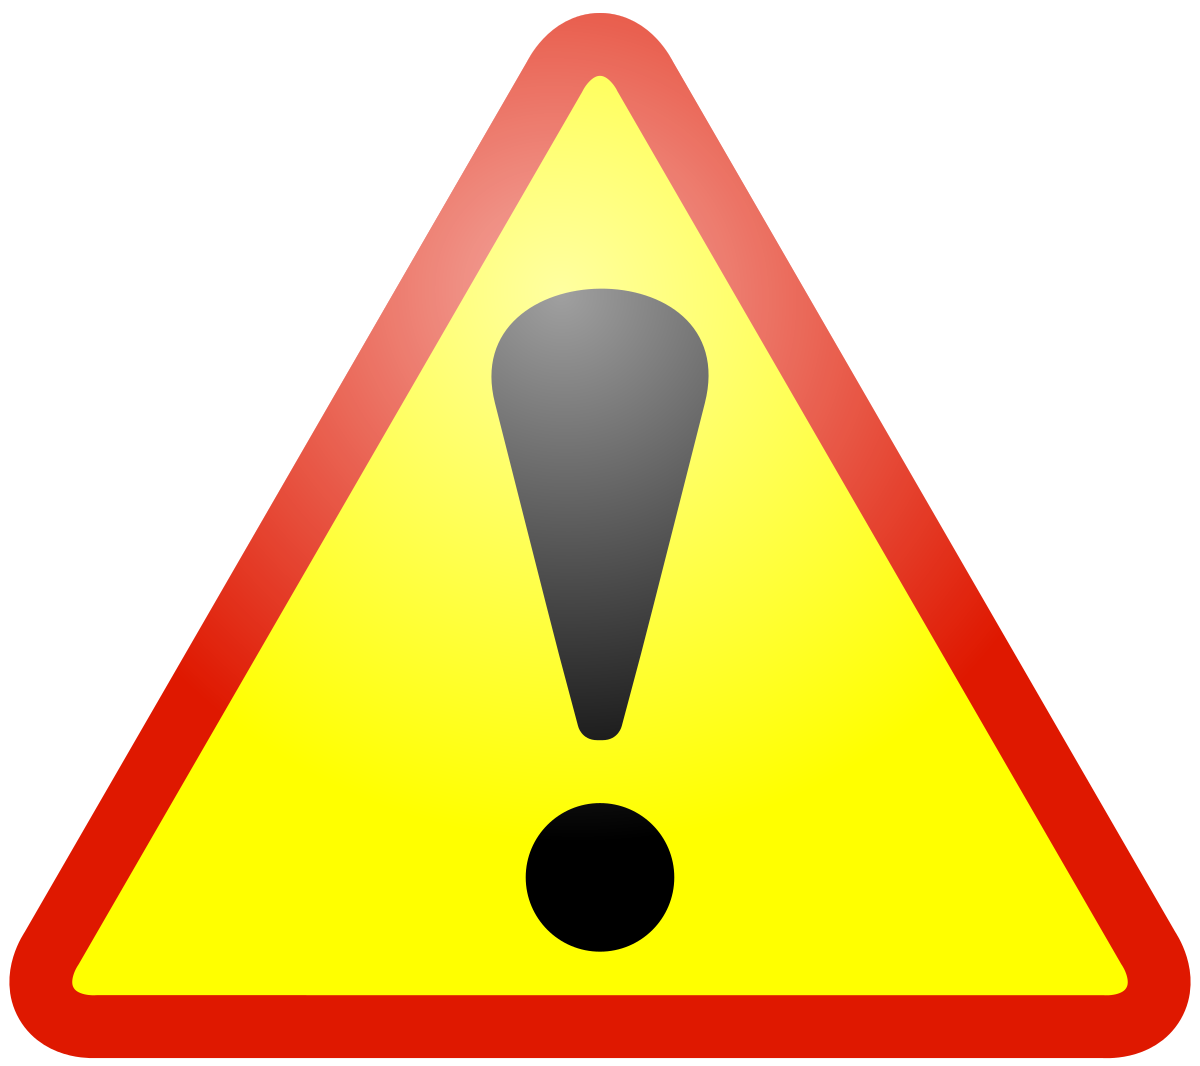 Warning sign or caution symbol